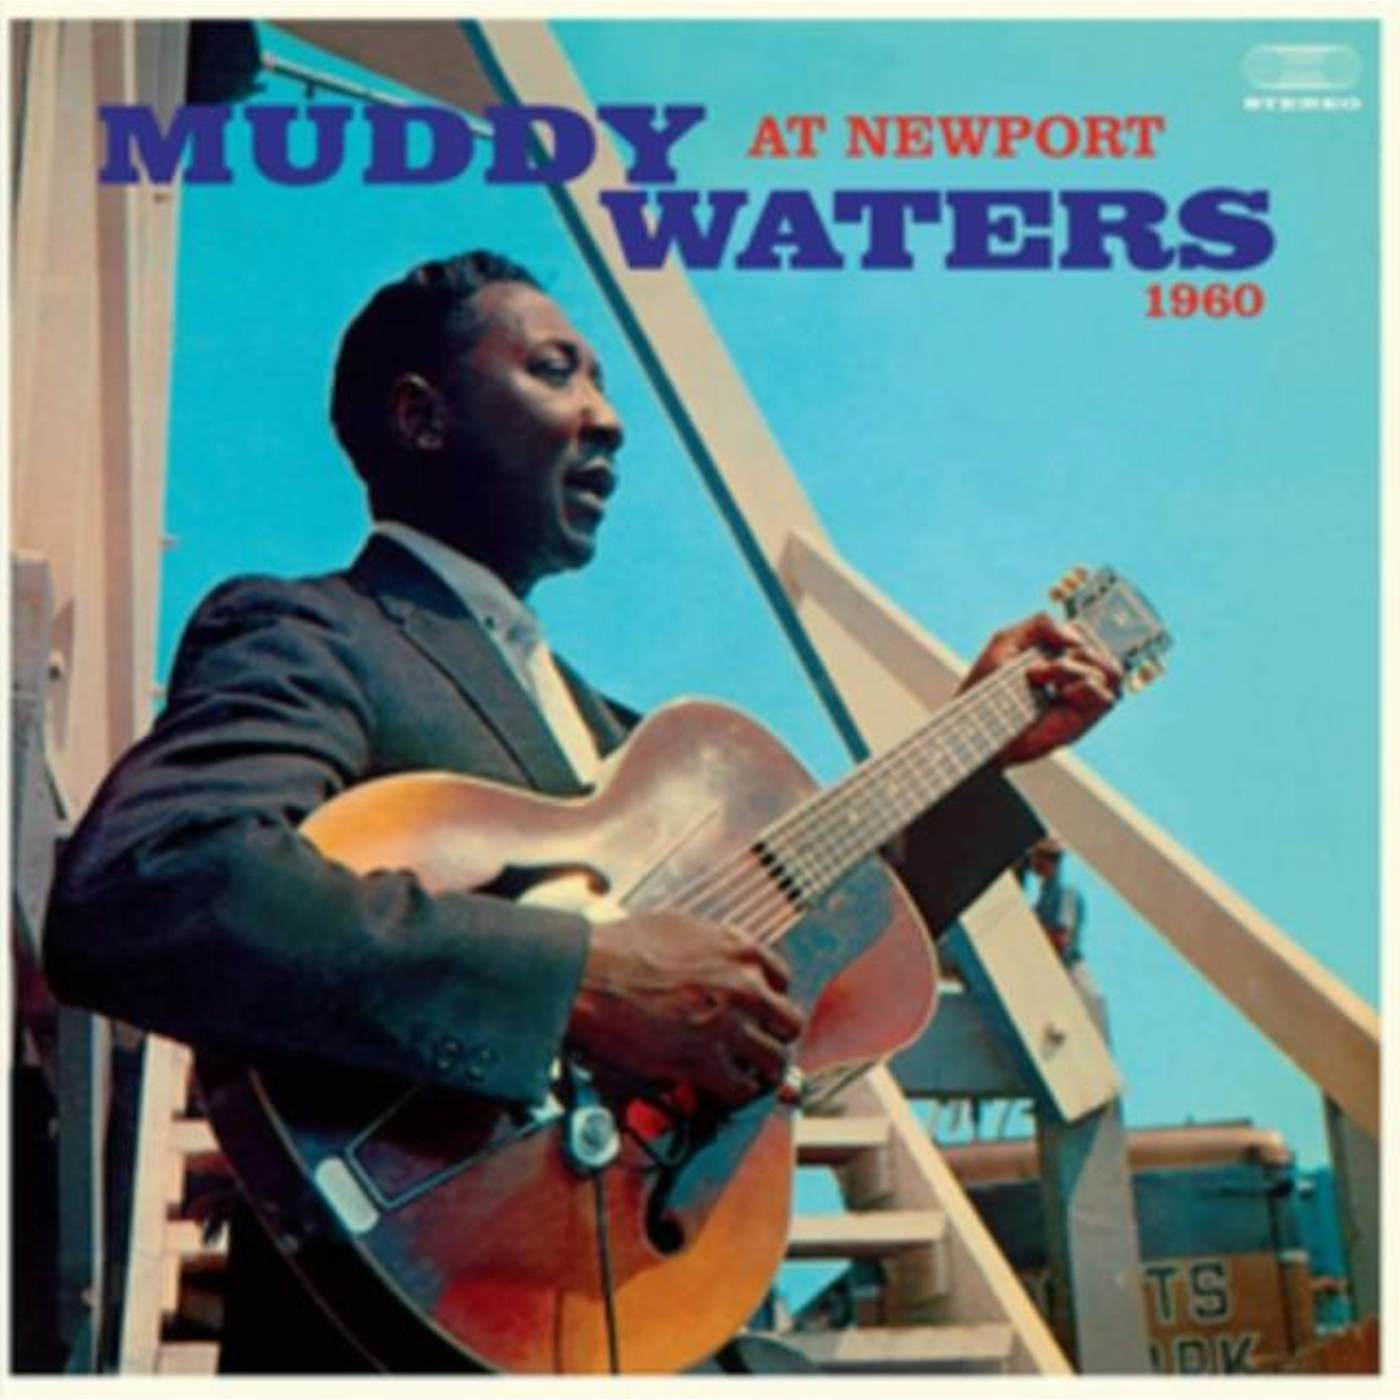 Muddy Waters LP Vinyl Record - At Newport 19 60 (Limited Transparent Purple Vinyl)